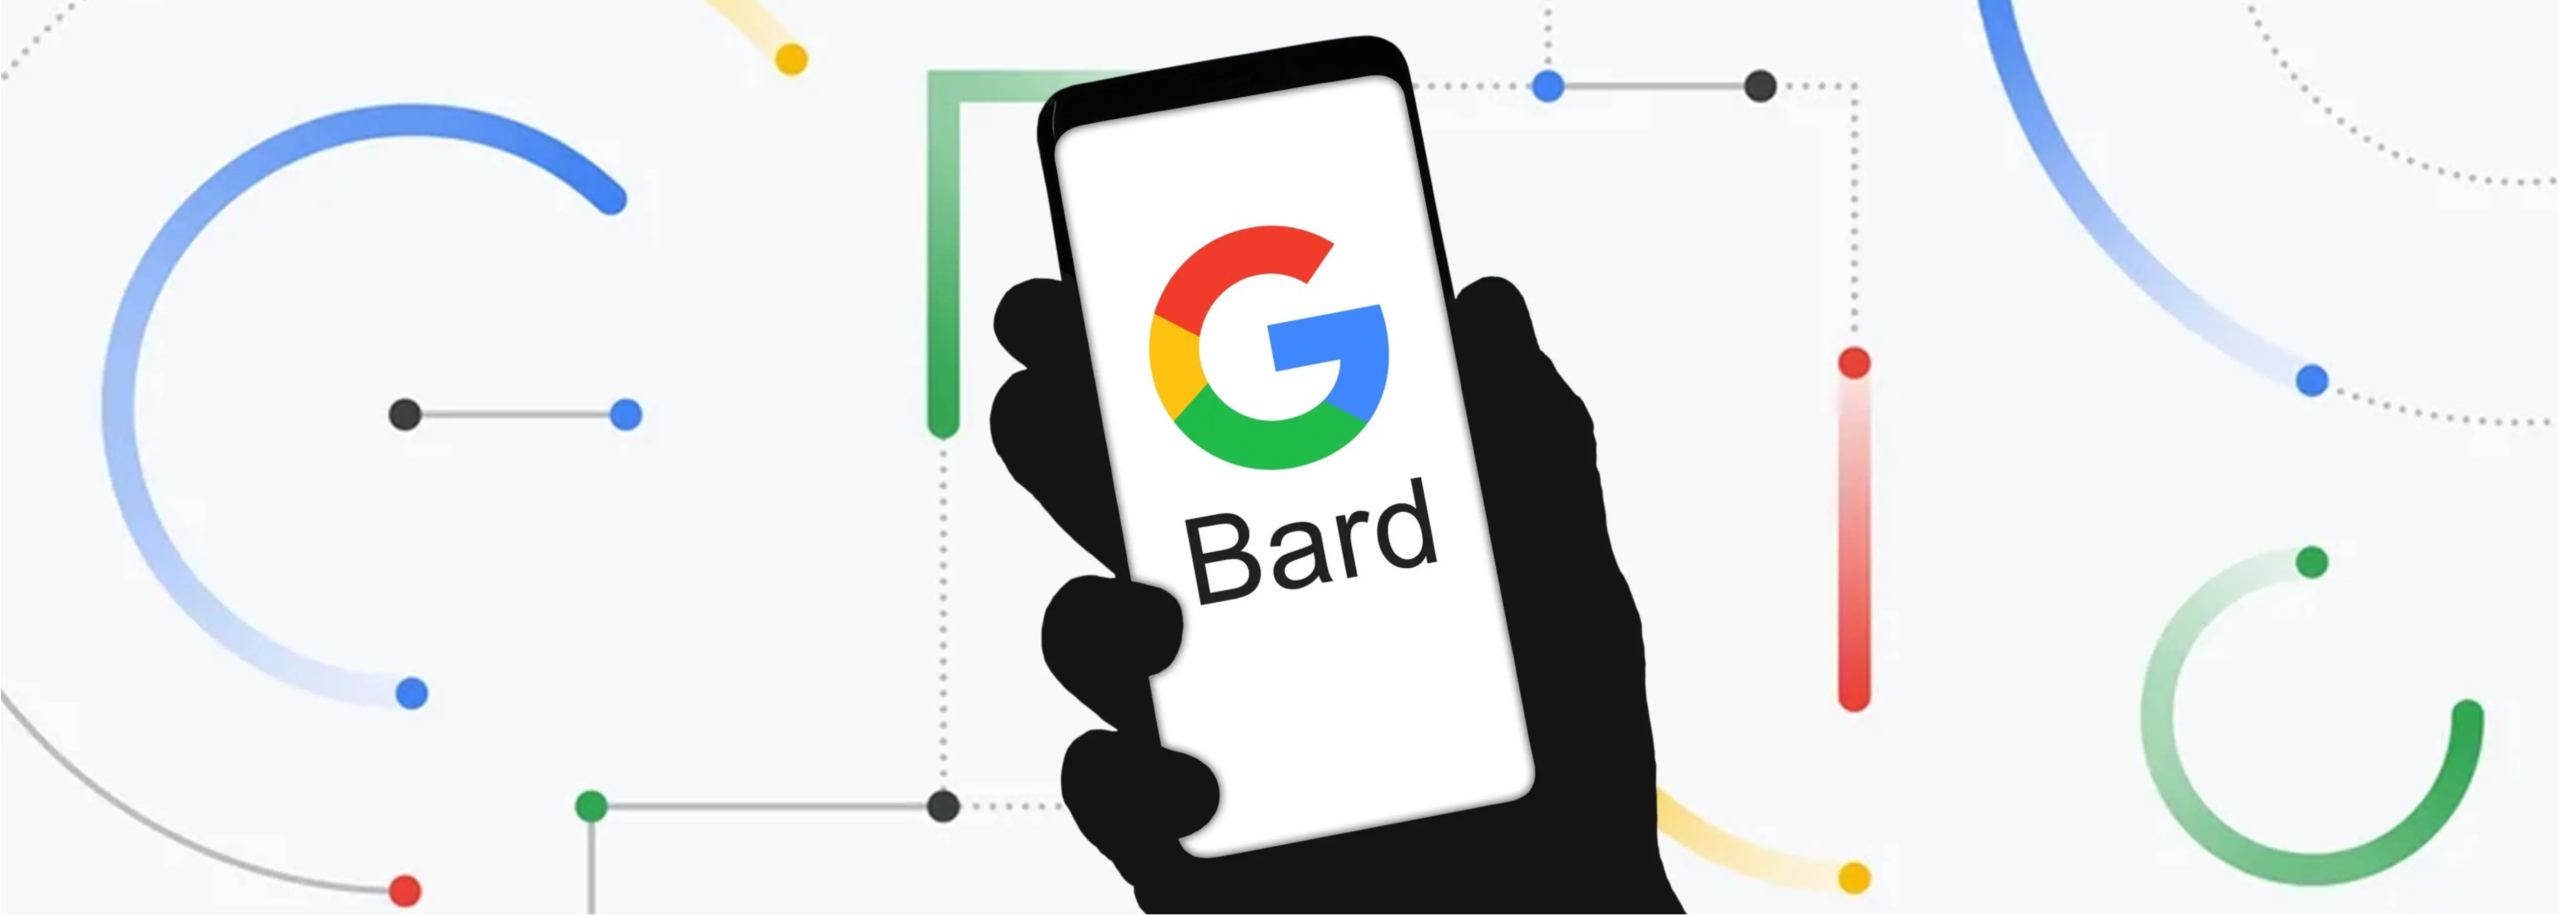 AI and SEO Tools Google Bard Smartphone Hand